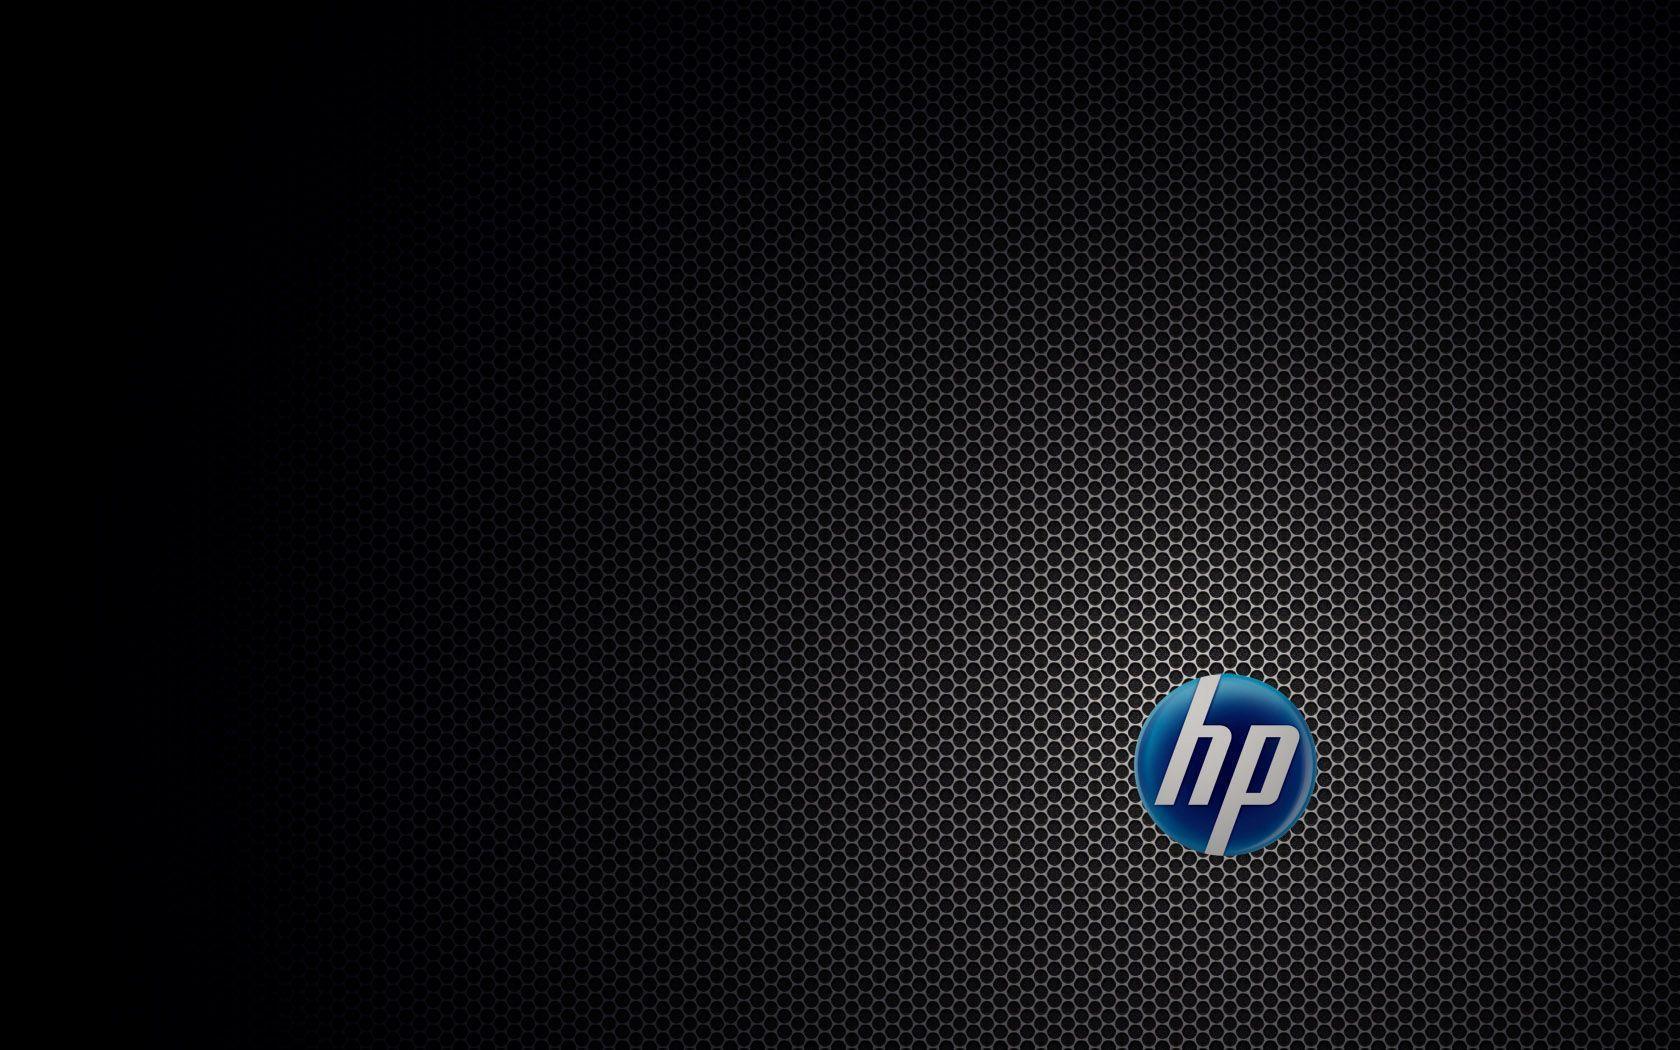 HP Desktop Background wallpaper